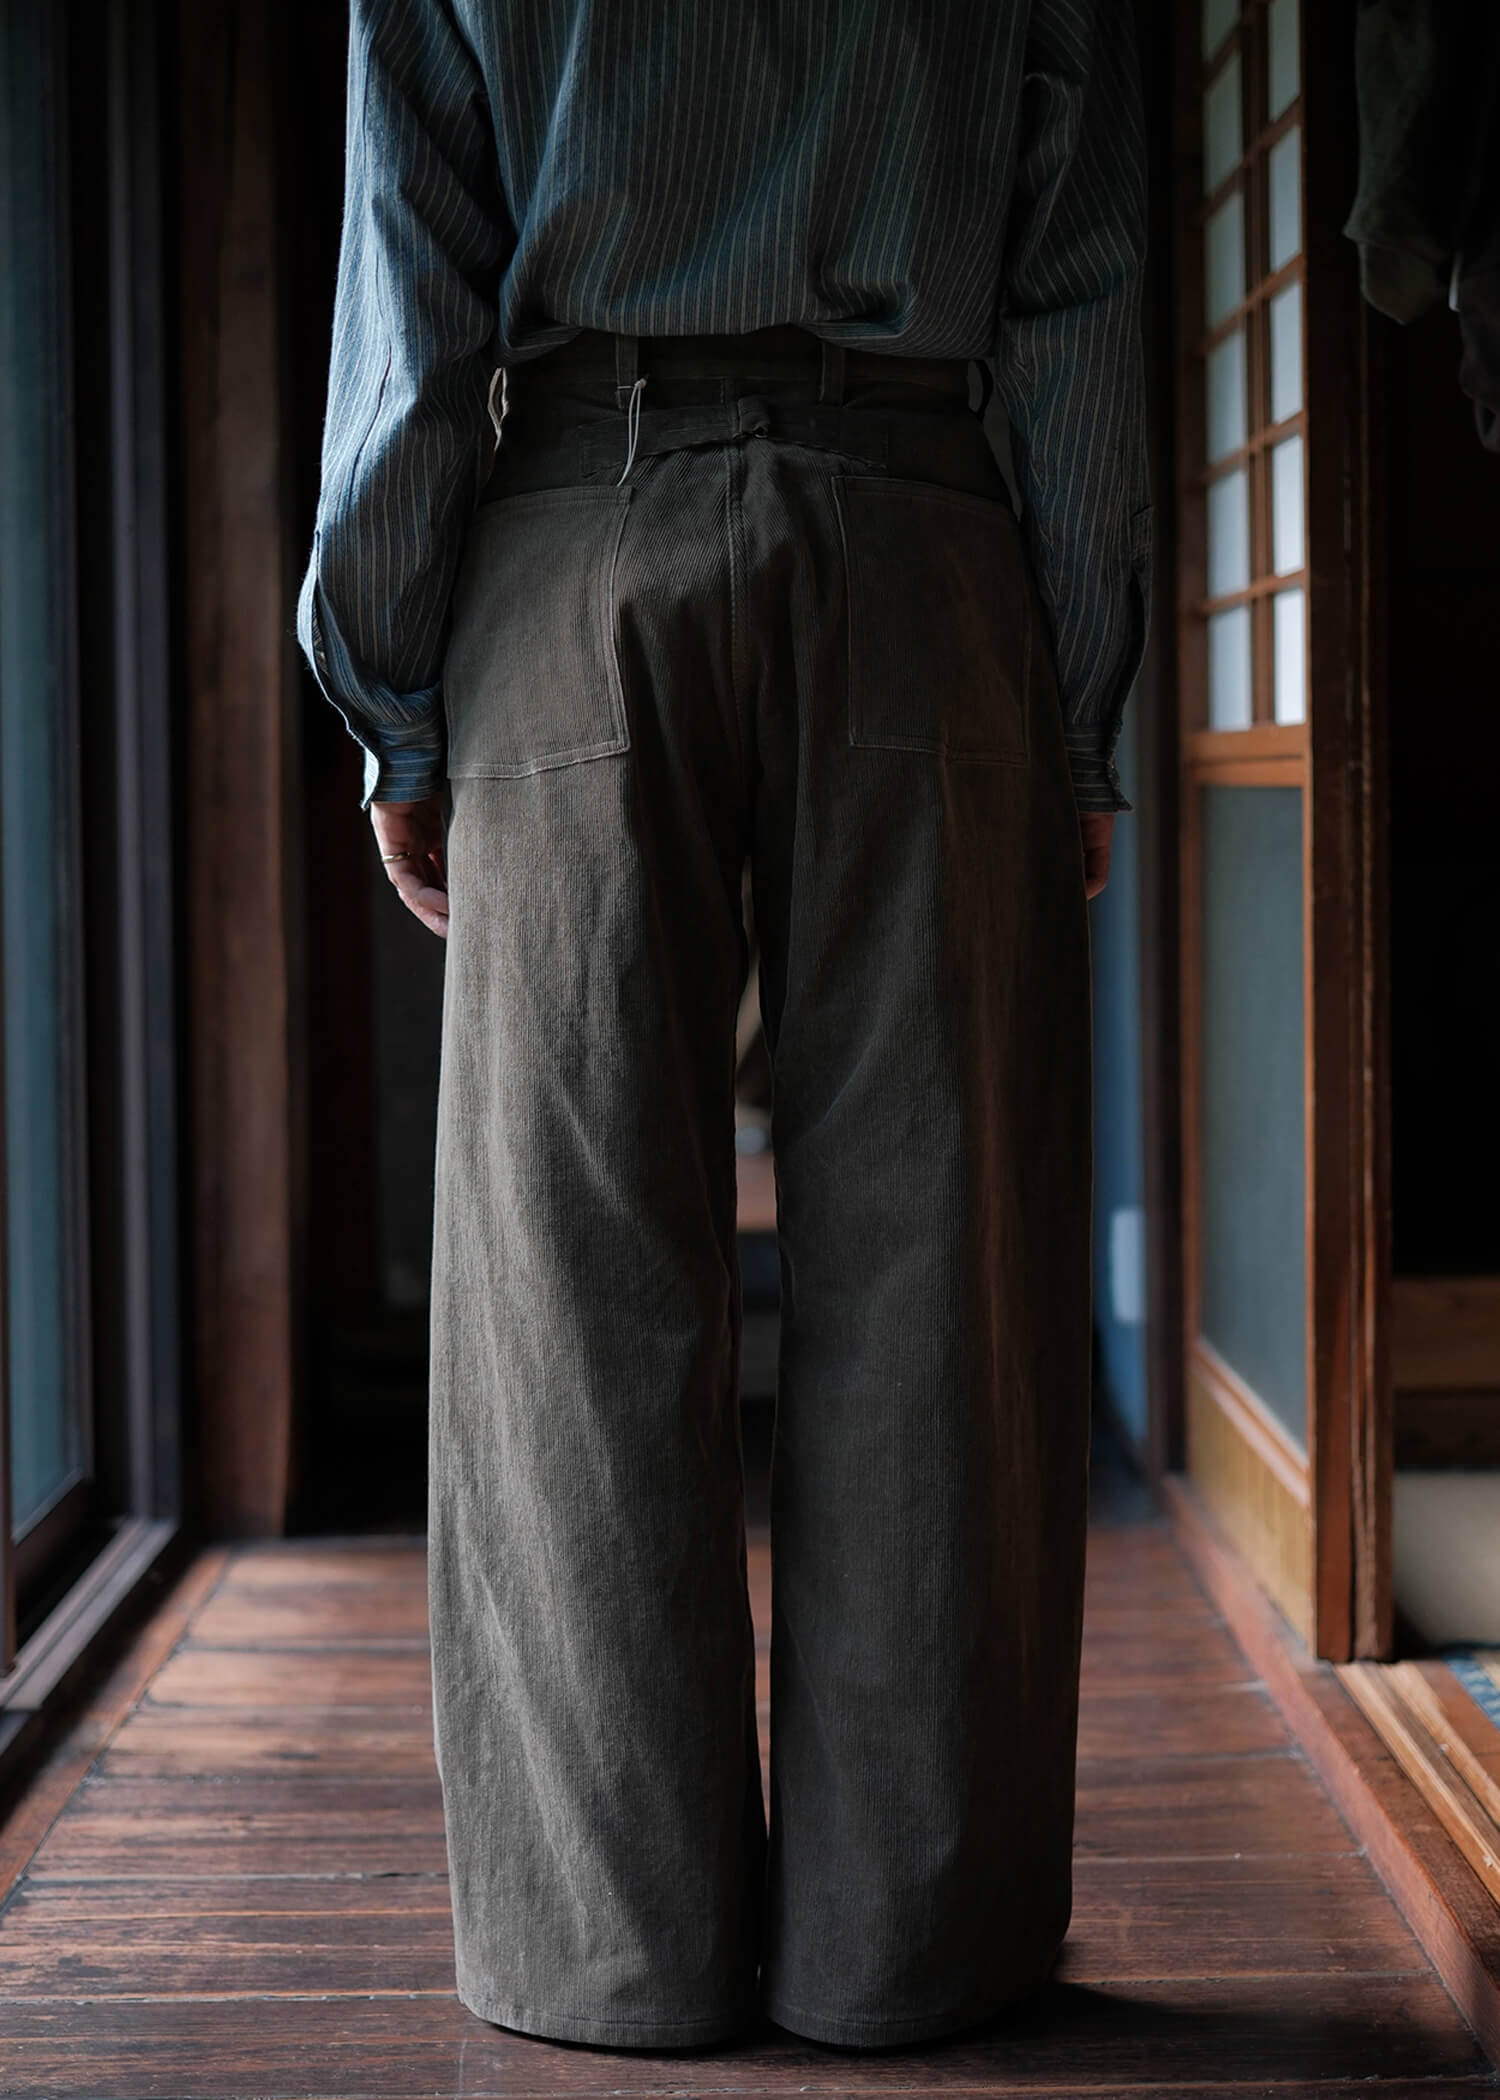 Taiga Takahashi Lot.204 Engineer Trousers / BROWN